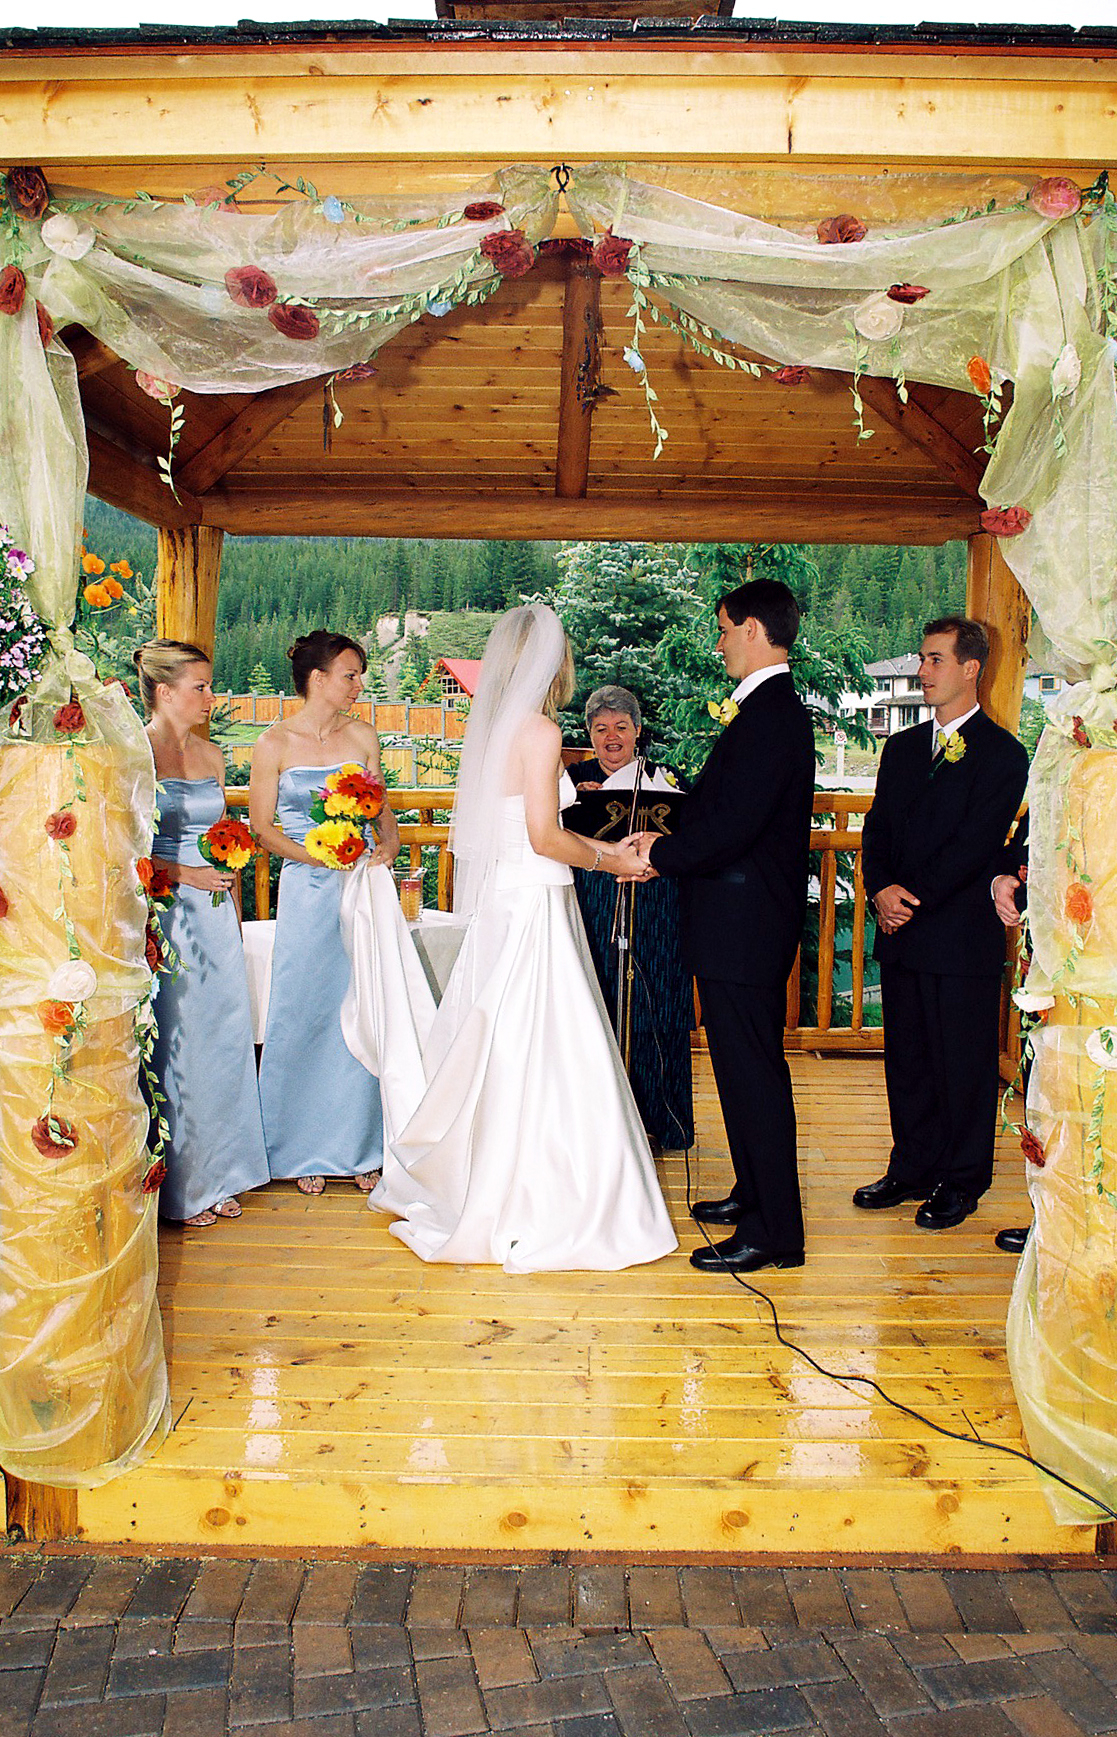 Wedding Memories at A Bear and Bison Inn